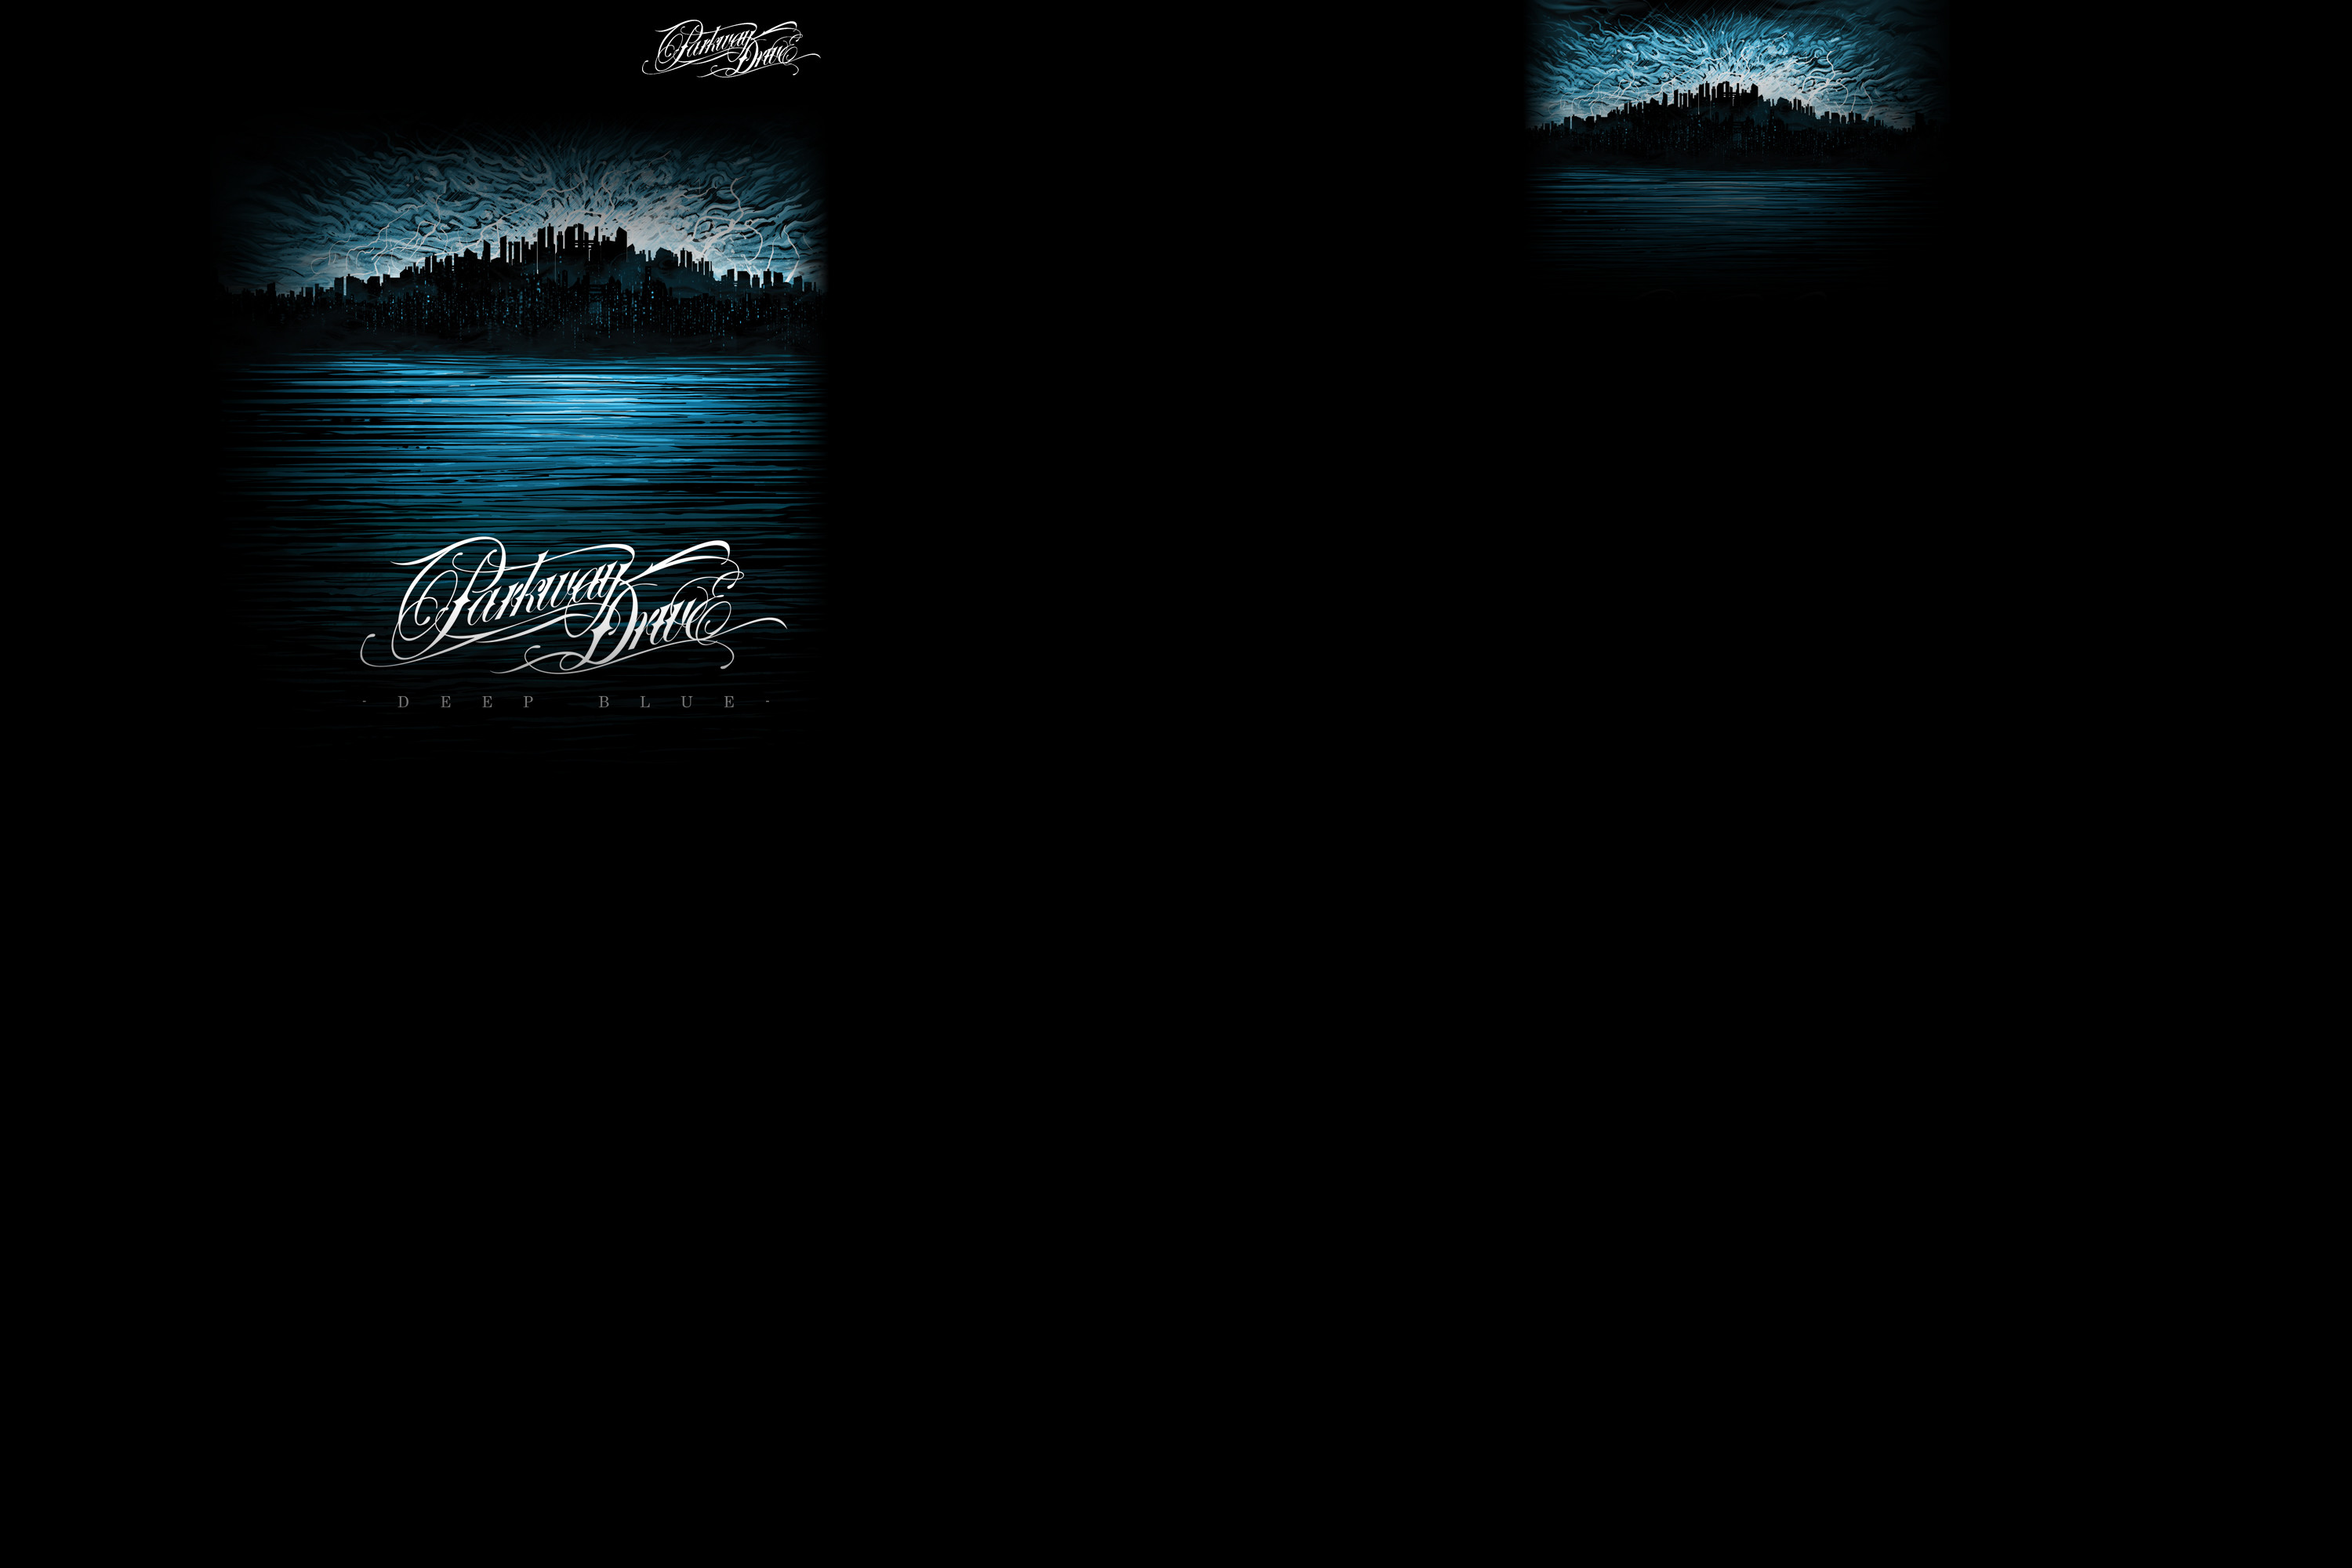 3000x2000 ... Parkway Drive Twitter background (Deep Blue album) by HeerenMistry